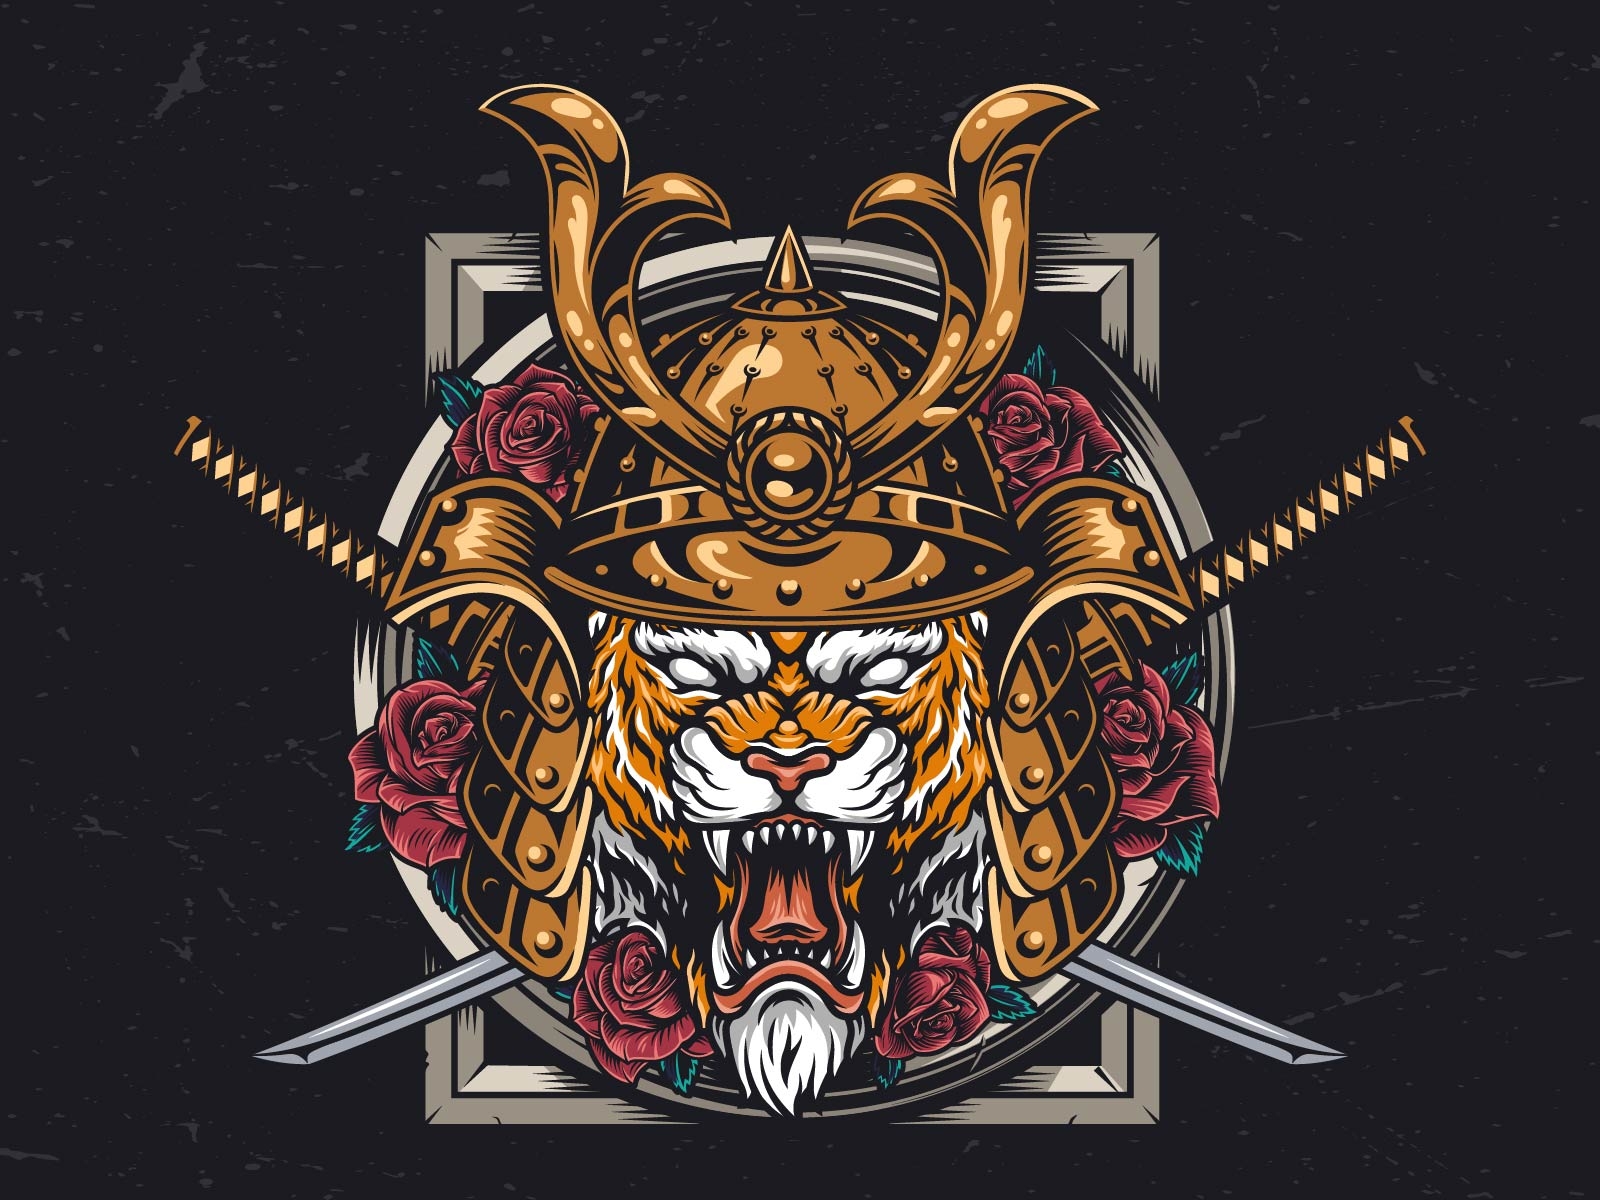 Tiger Samurai vector illustration by DGIM studio on Dribbble